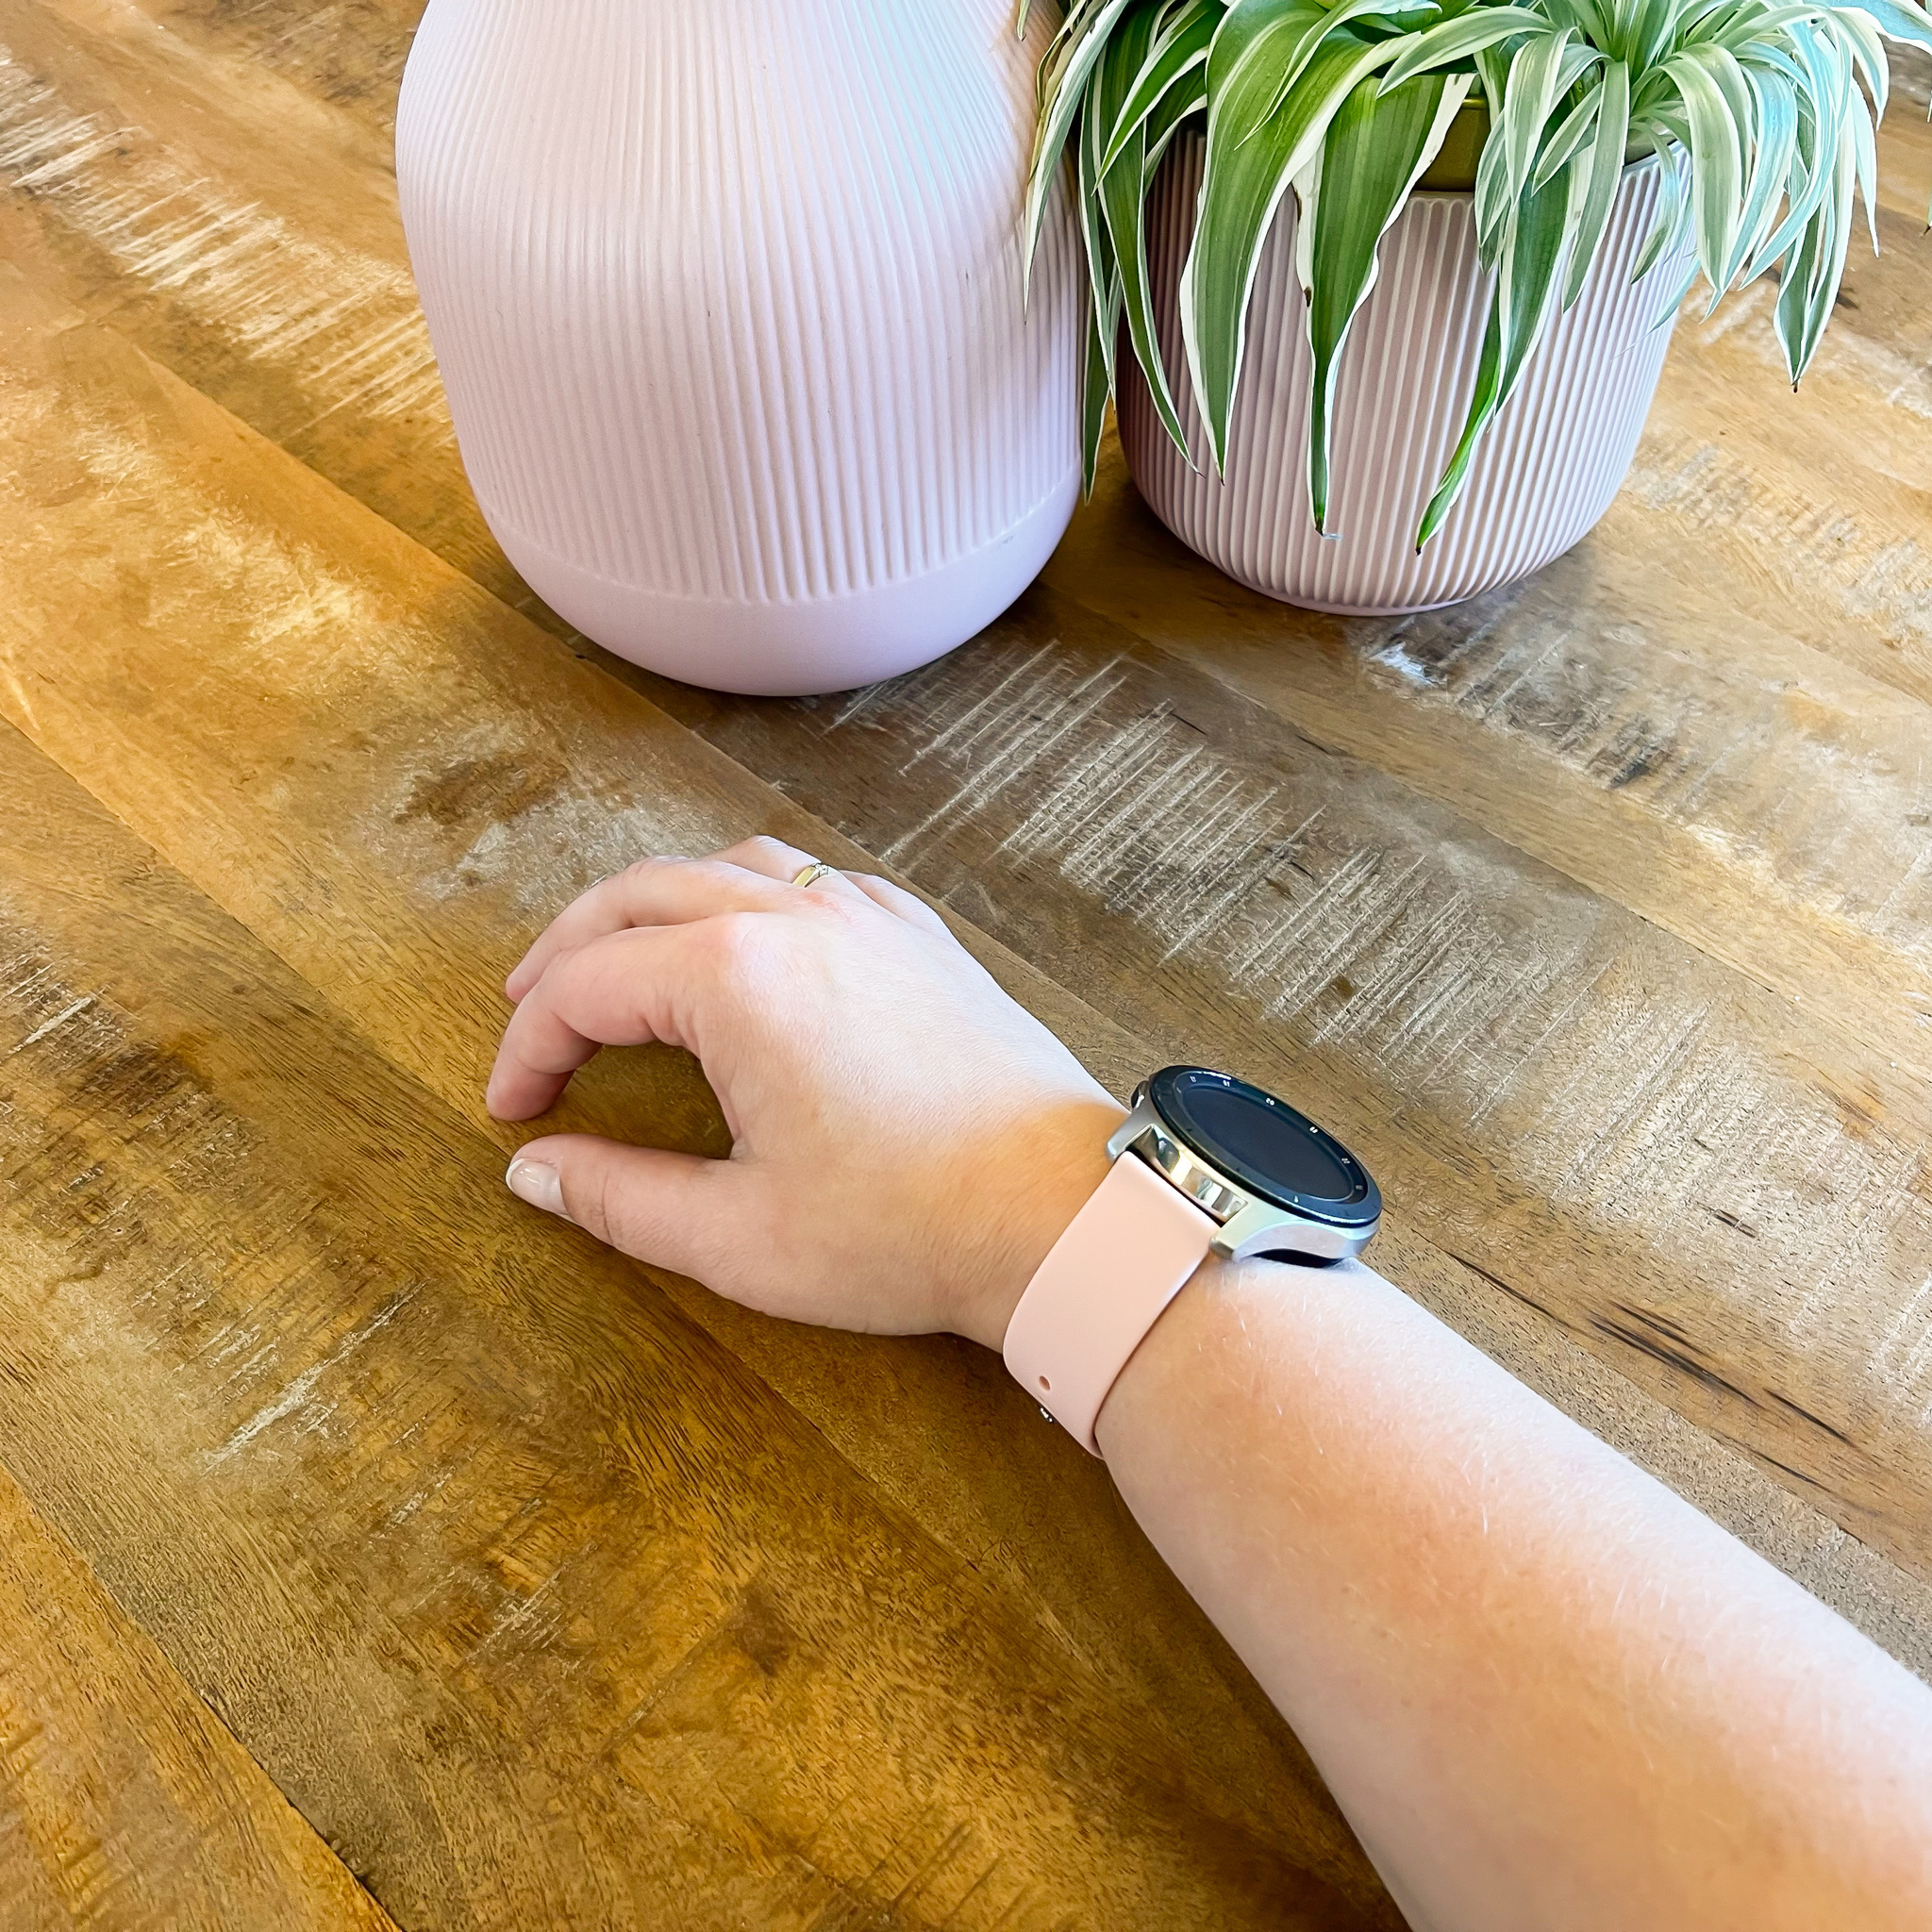 Cinturino sport in silicone per Samsung Galaxy Watch - rosa